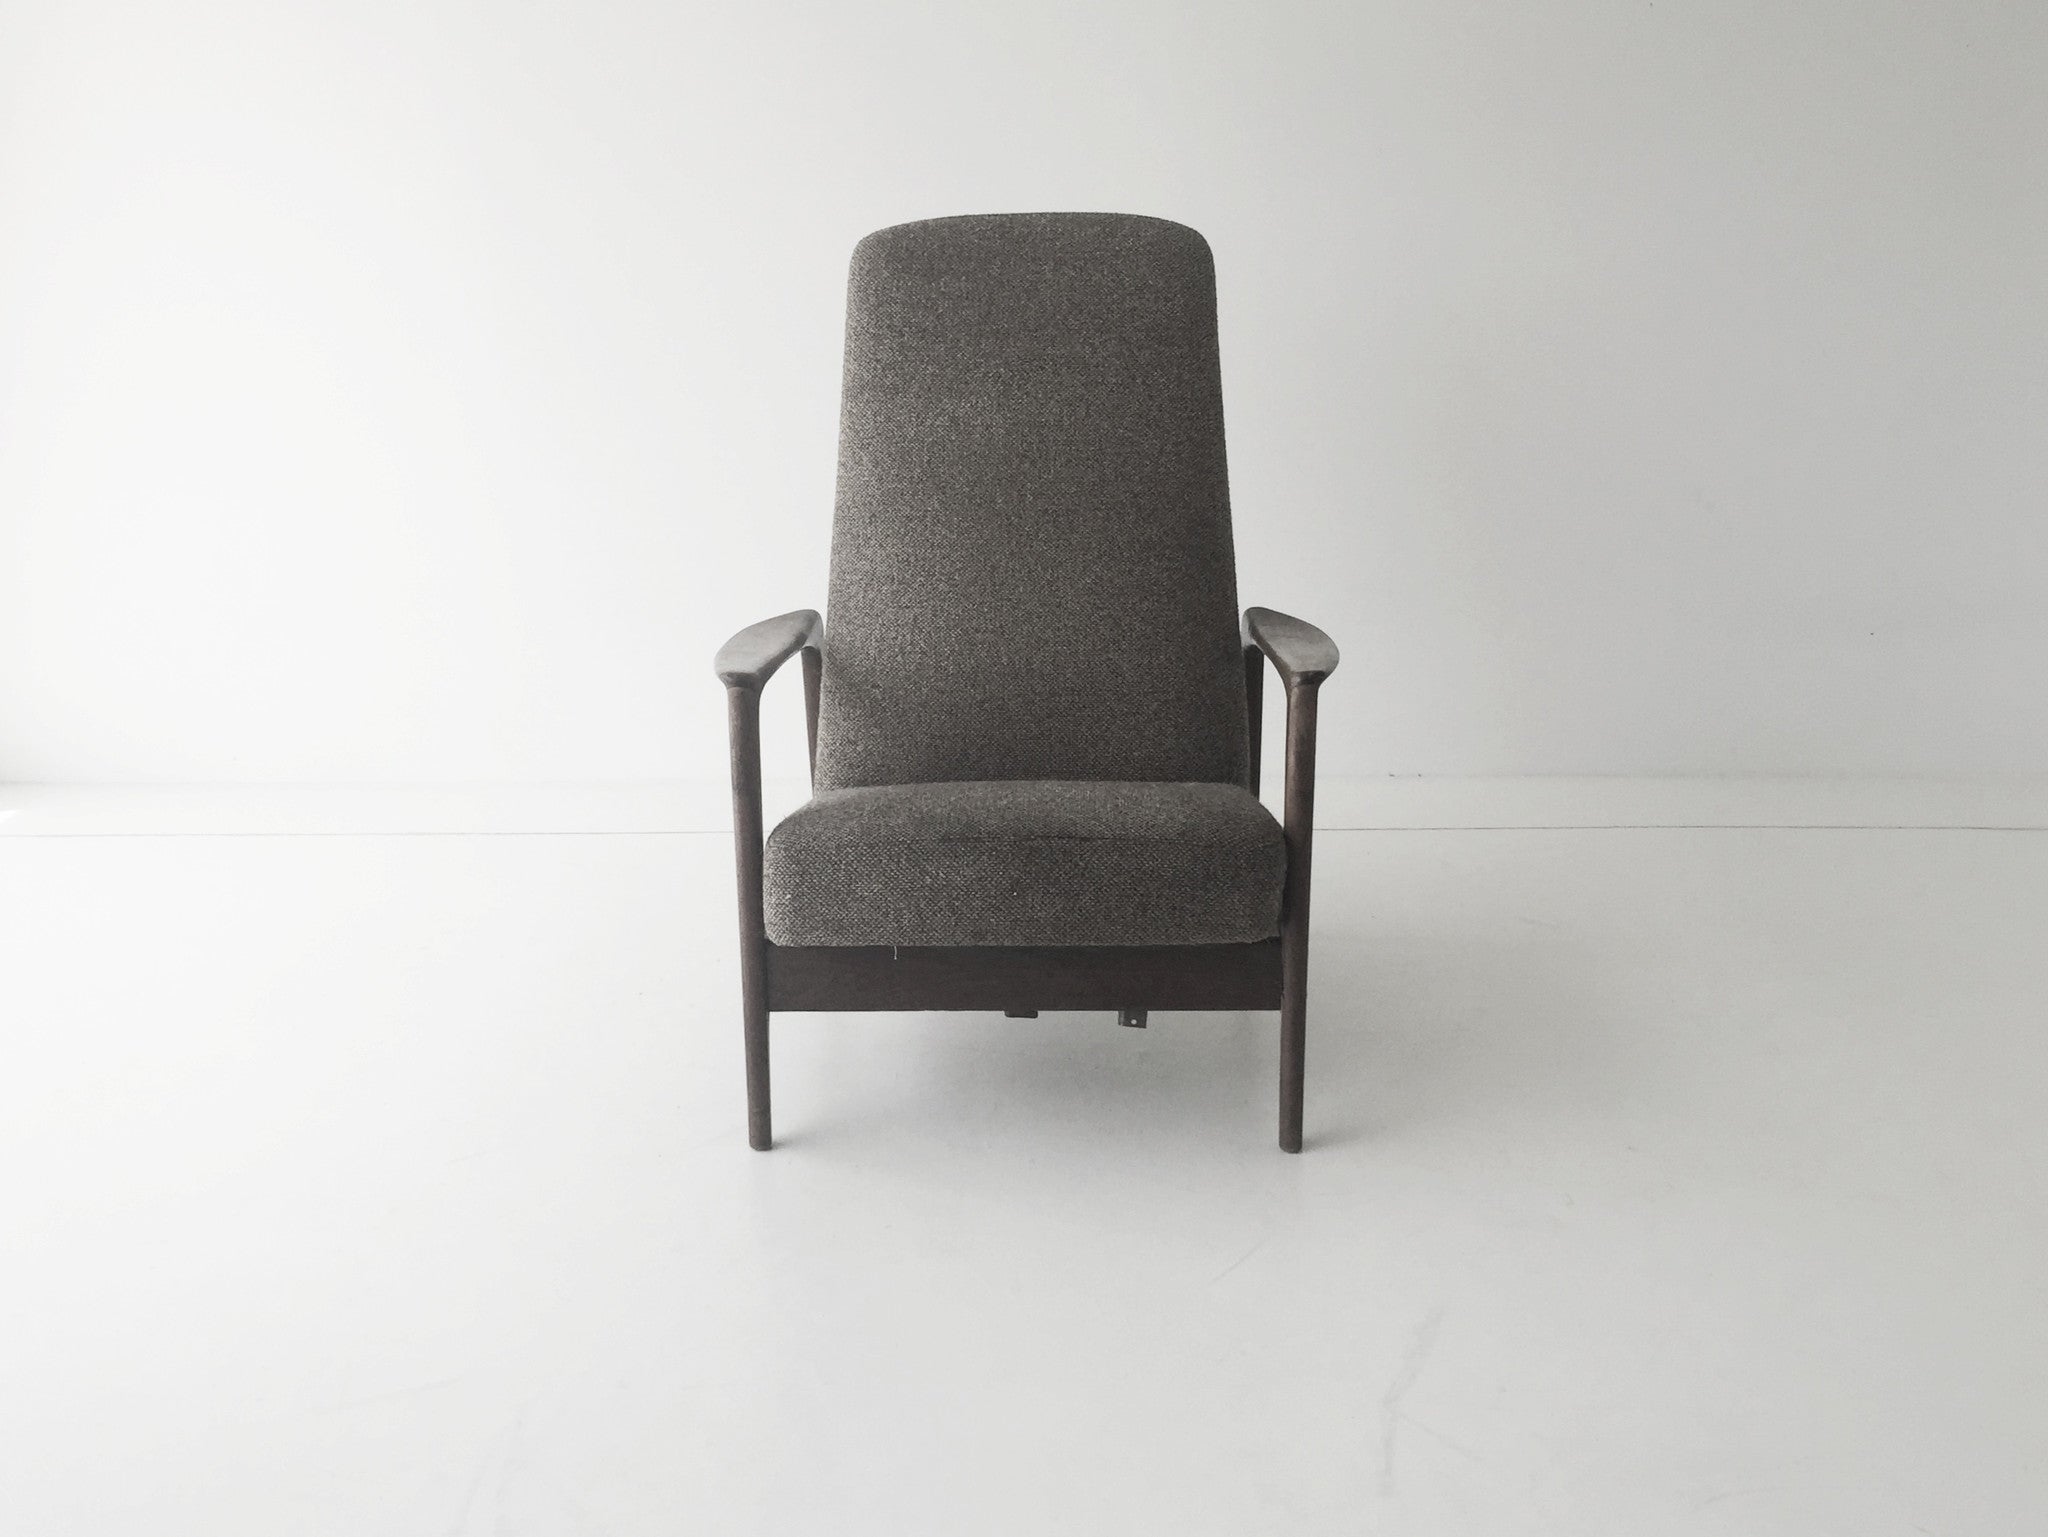 Alf Svensson Lounge Chair for DUX - 06031602